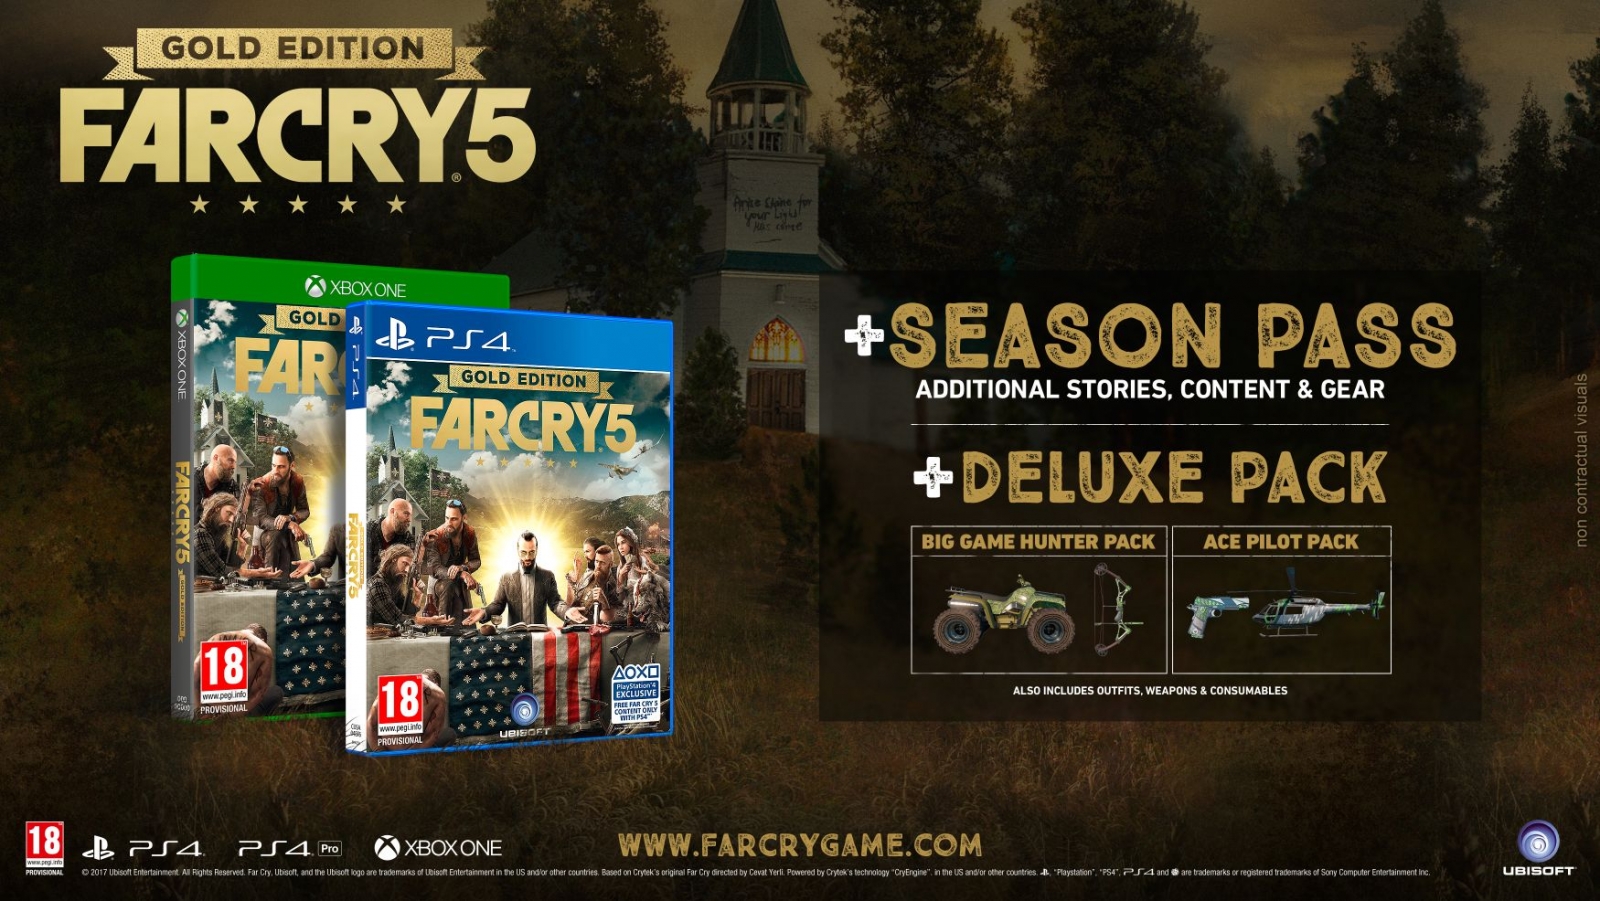 XBOXOne Far Cry 5 Gold Edition